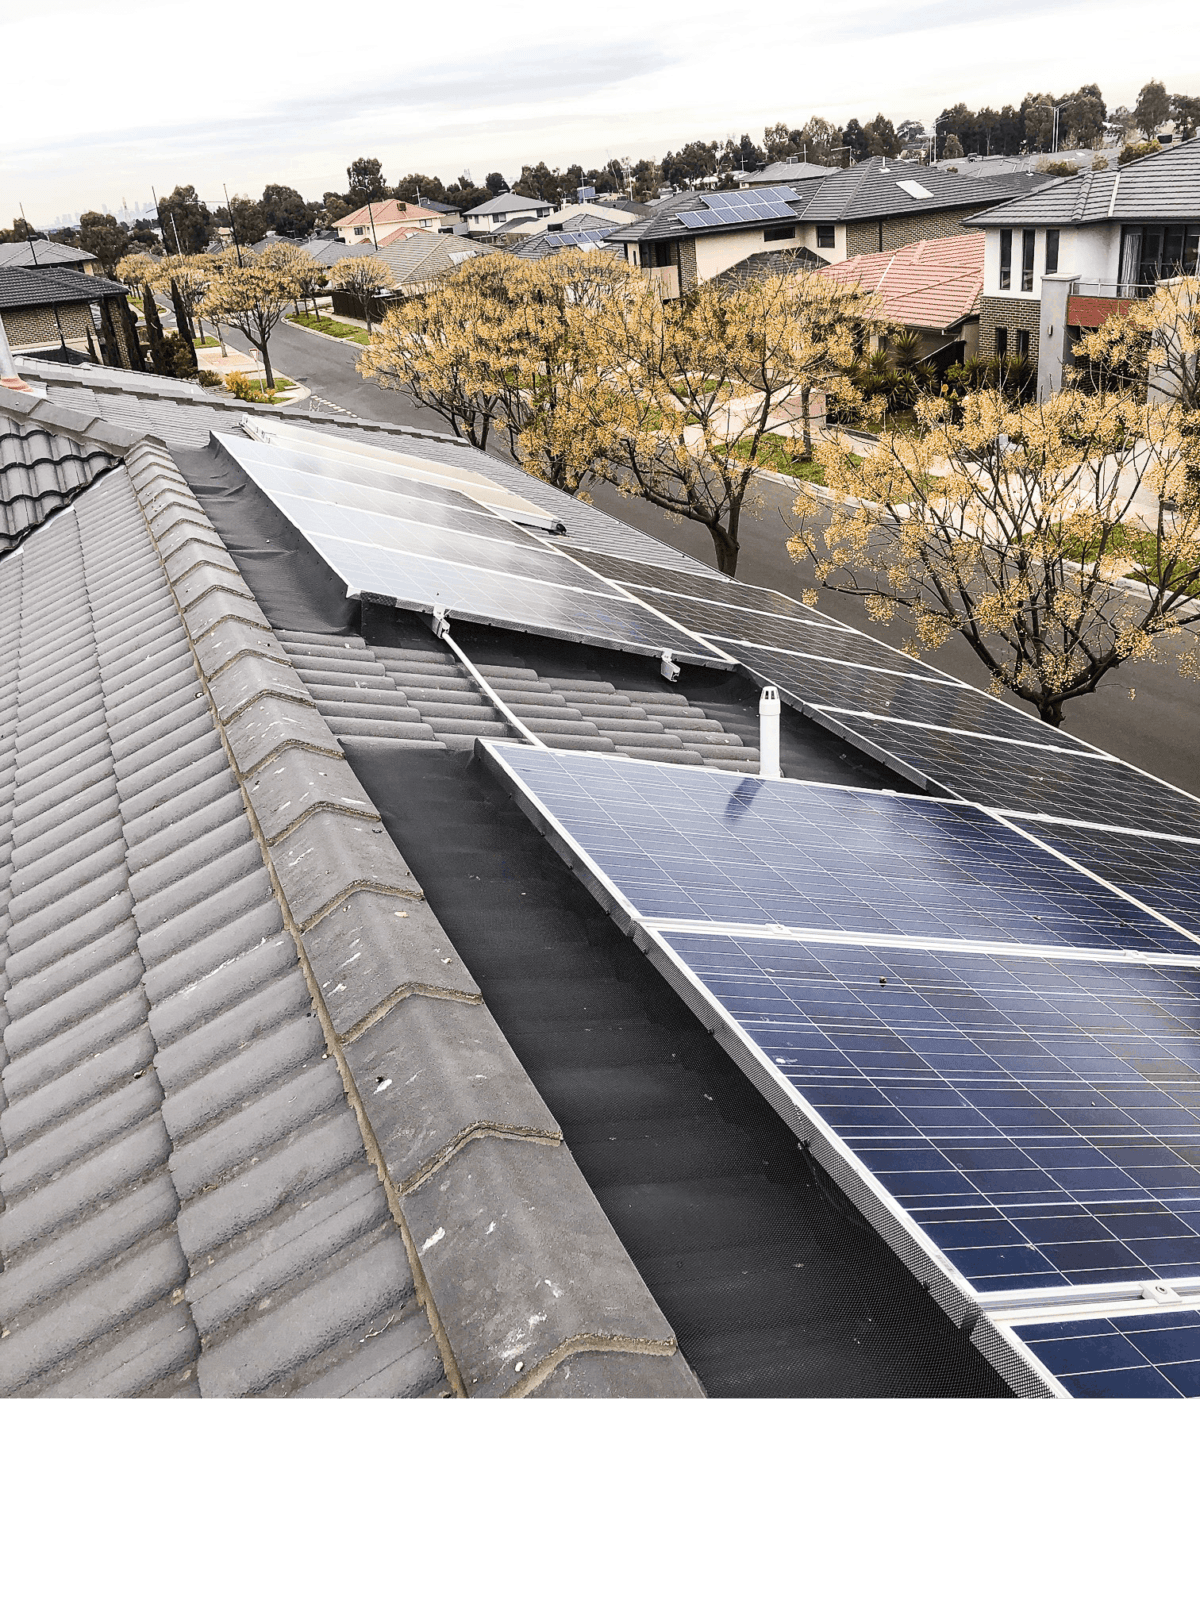 Tile roof solar panel bird proofing